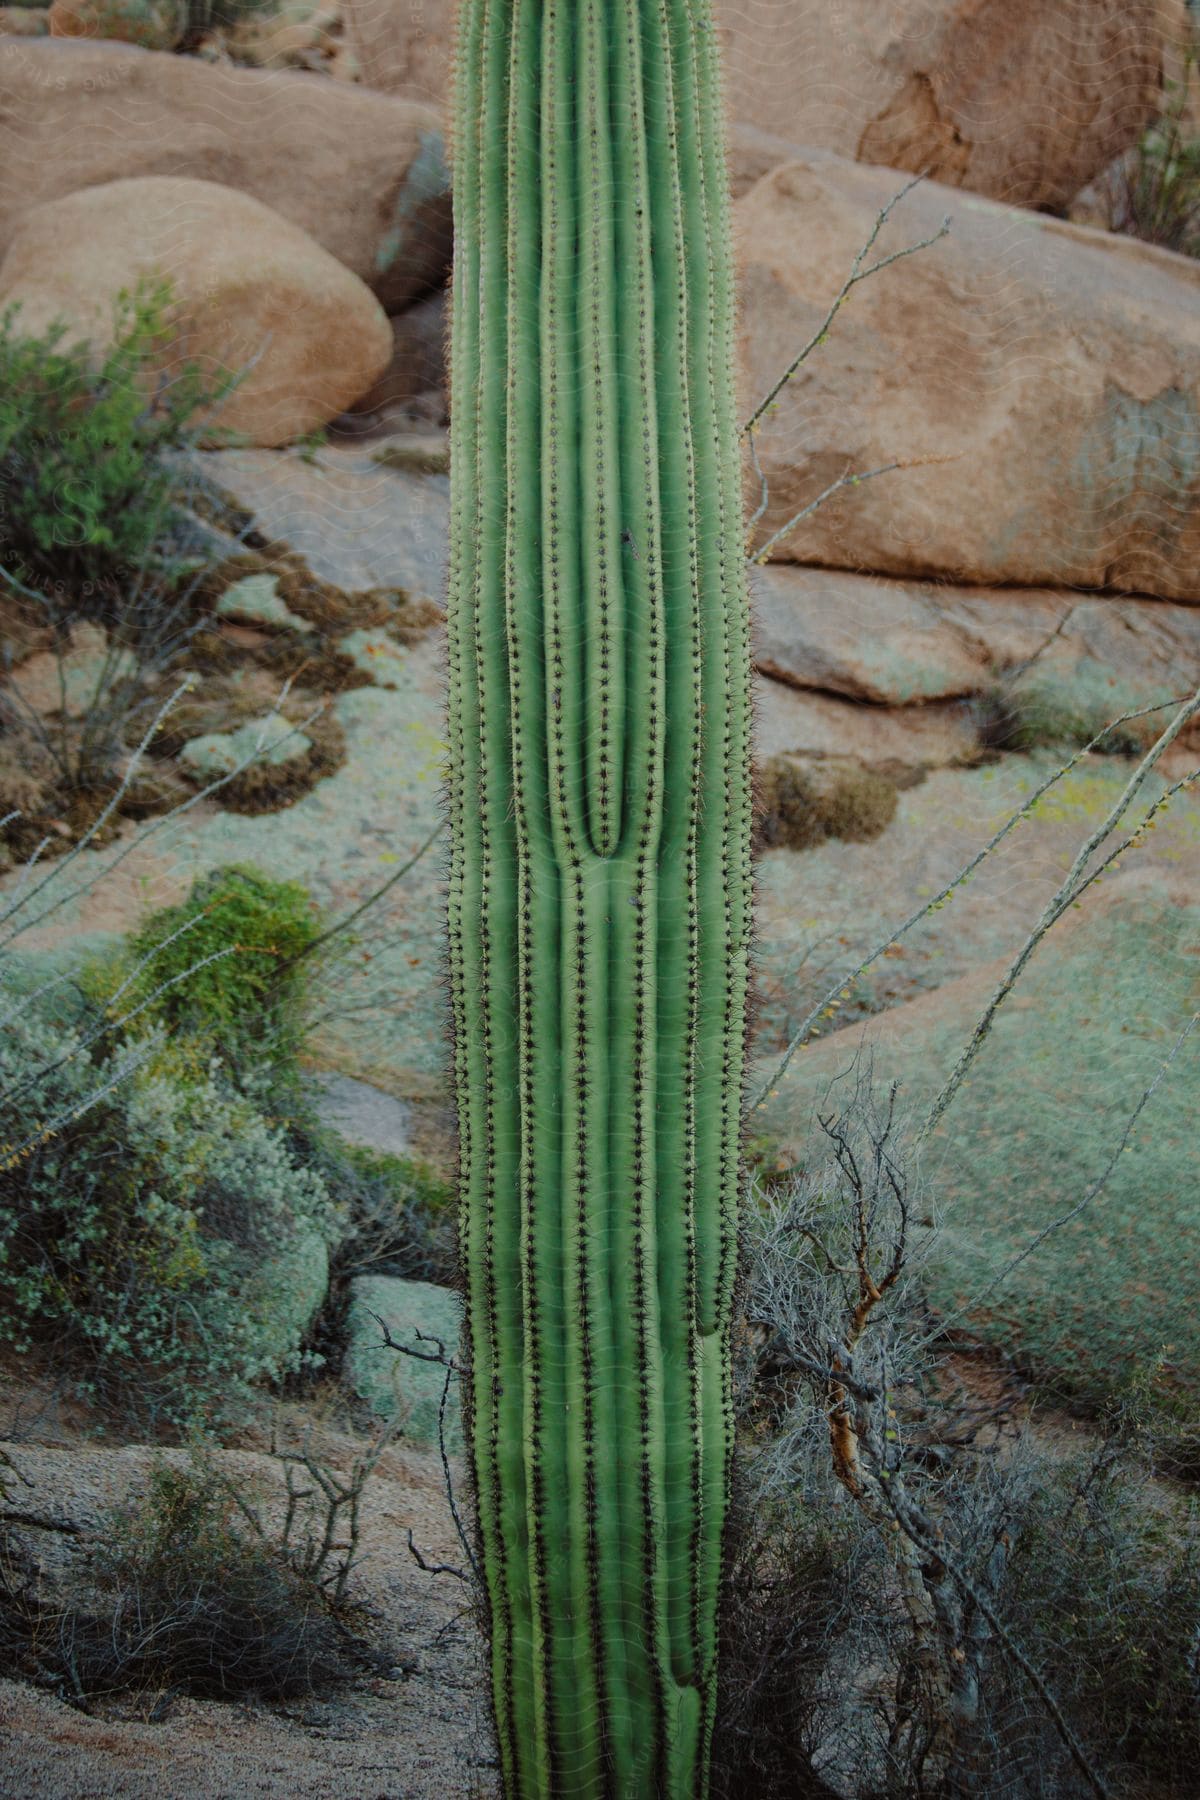 A cactus sitting in sunshine in the arizona desert